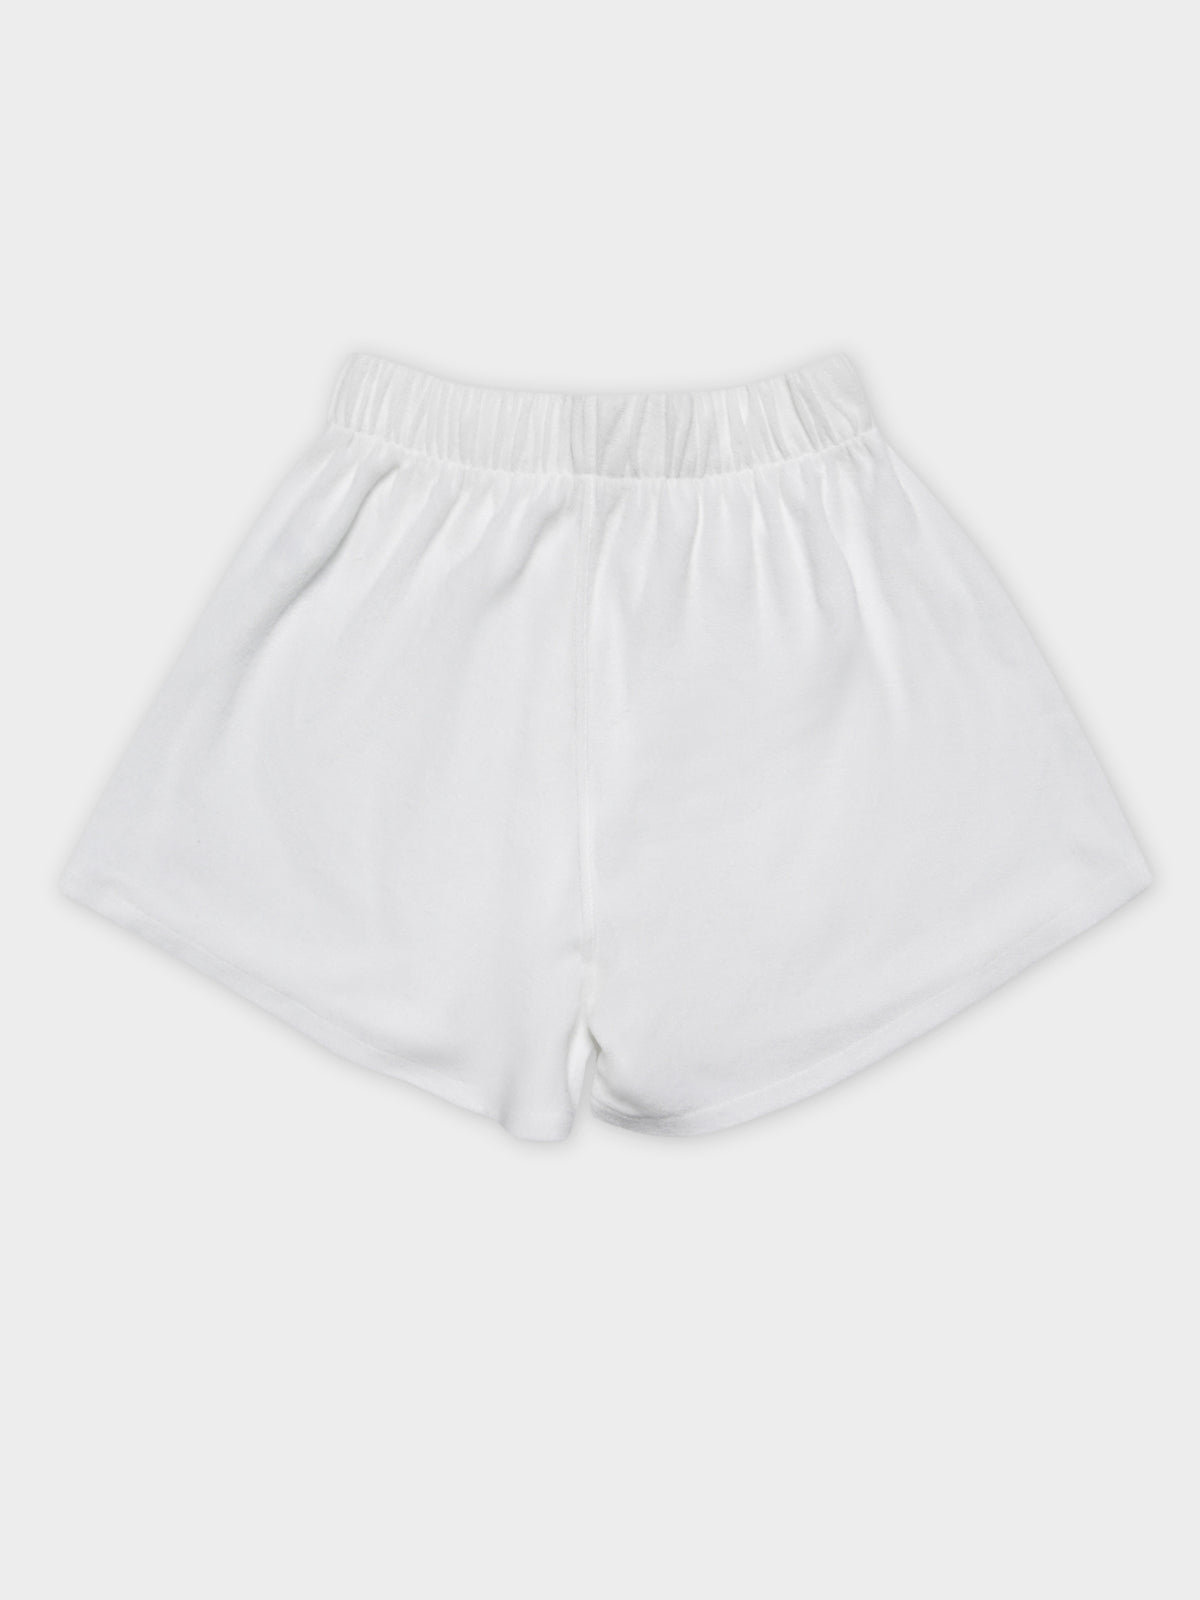 Havana Terry Beach Shorts in White